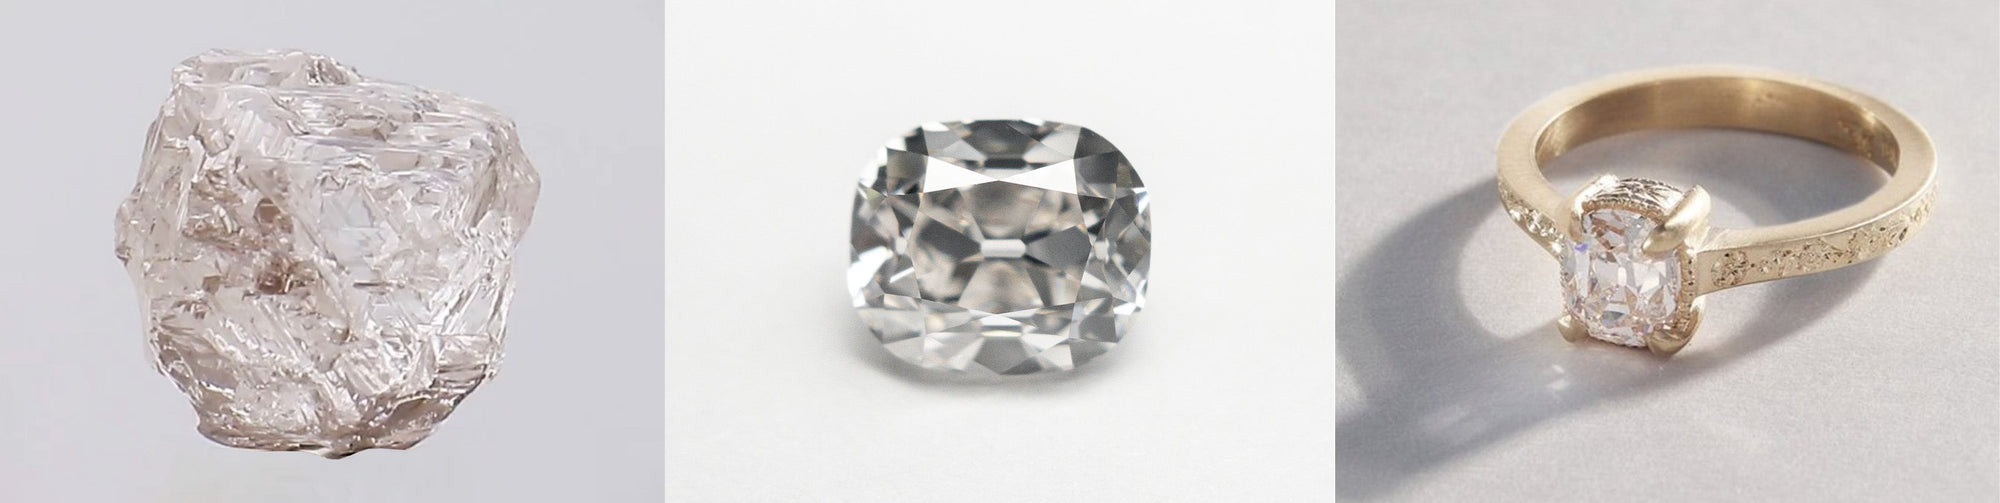 Diamond from mine to market